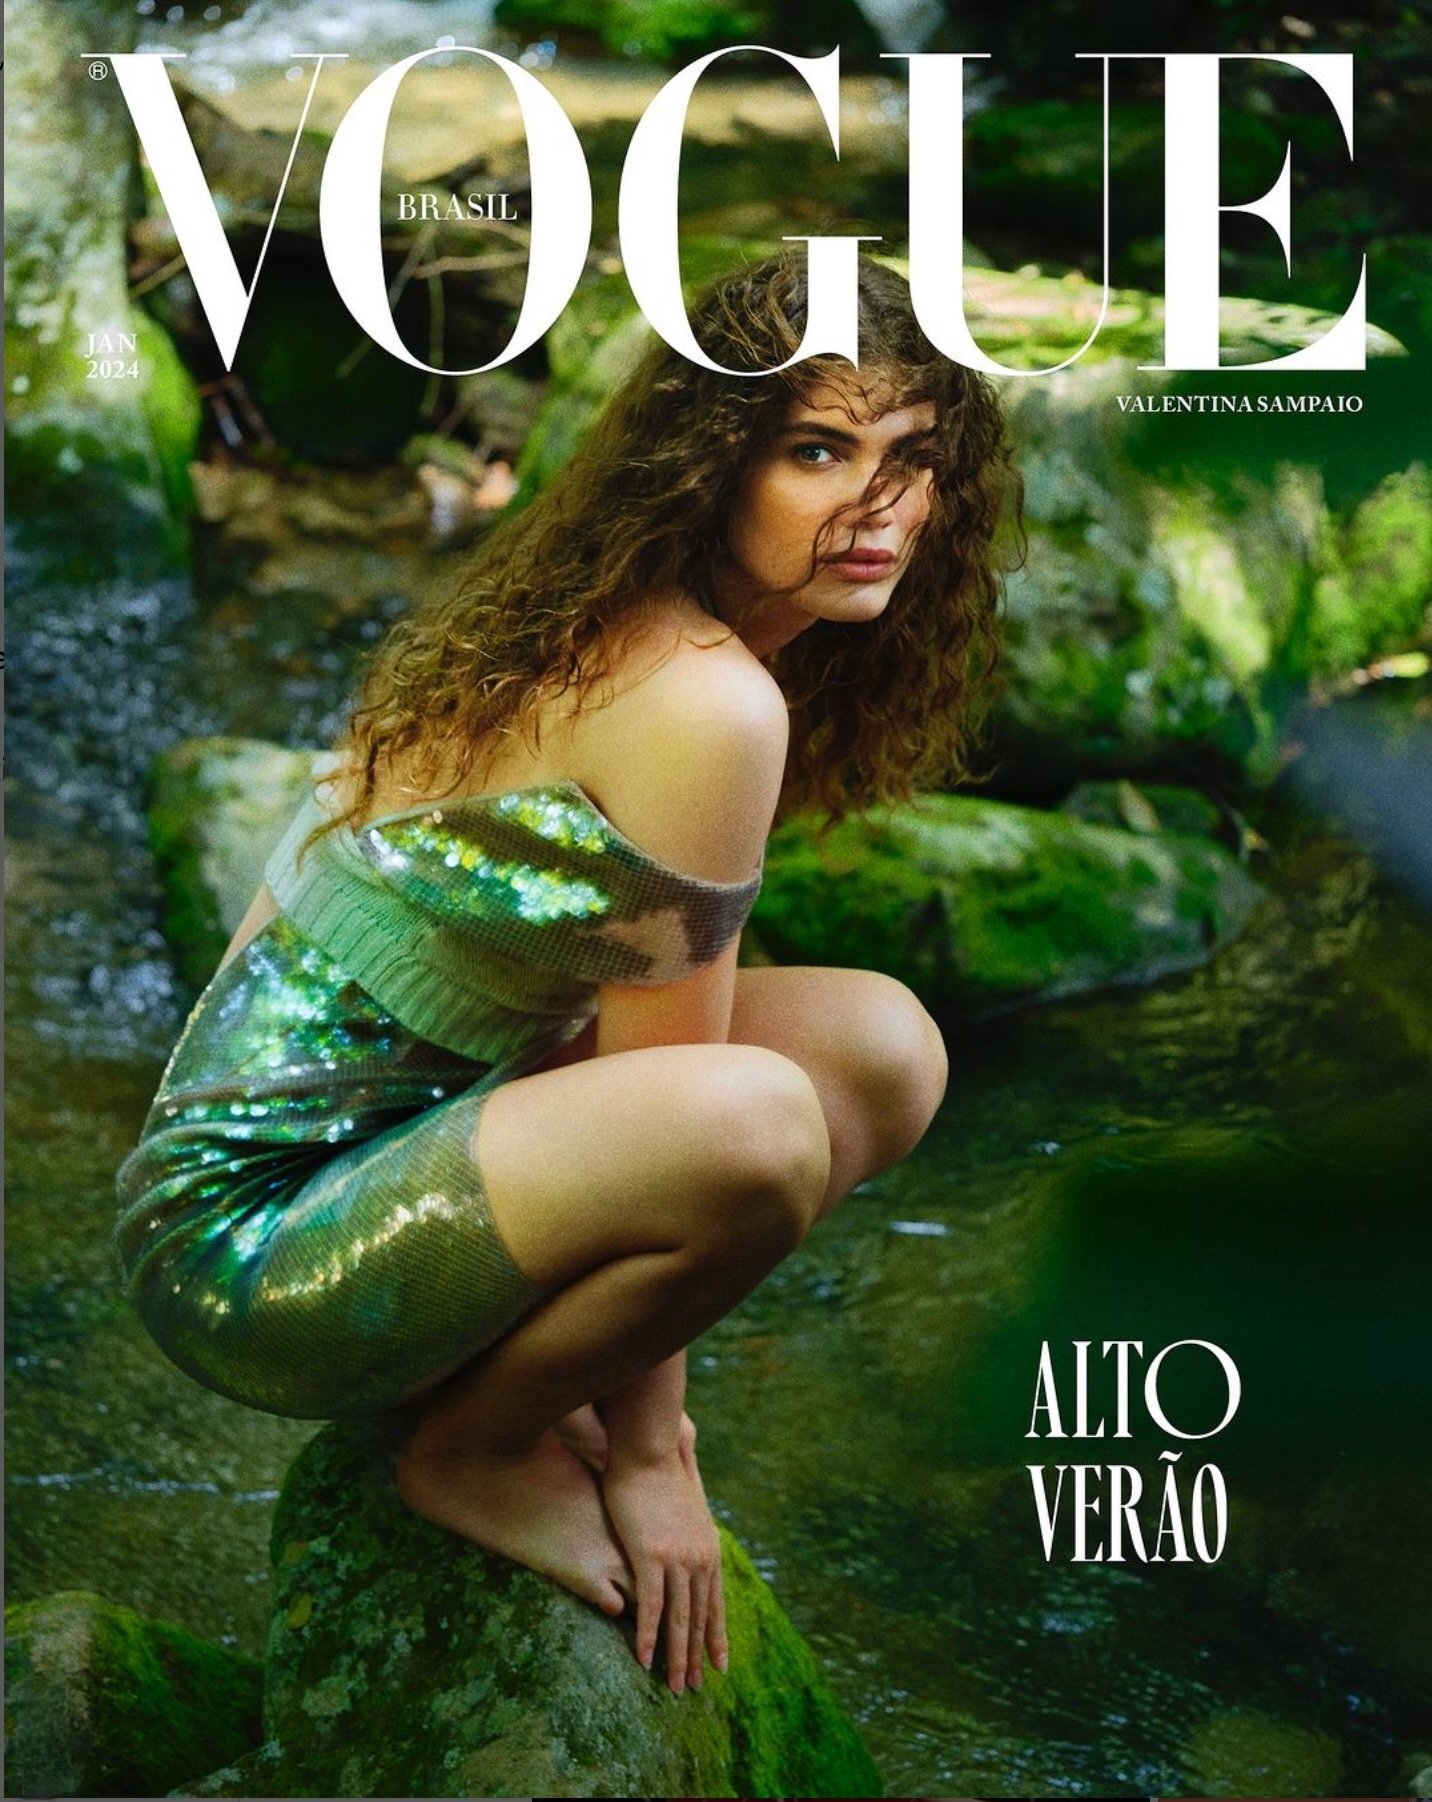 Valentina-Sampaio-by-Mariana-Maltoni-Covers-Vogue-Brazil-January 2024-3.jpeg